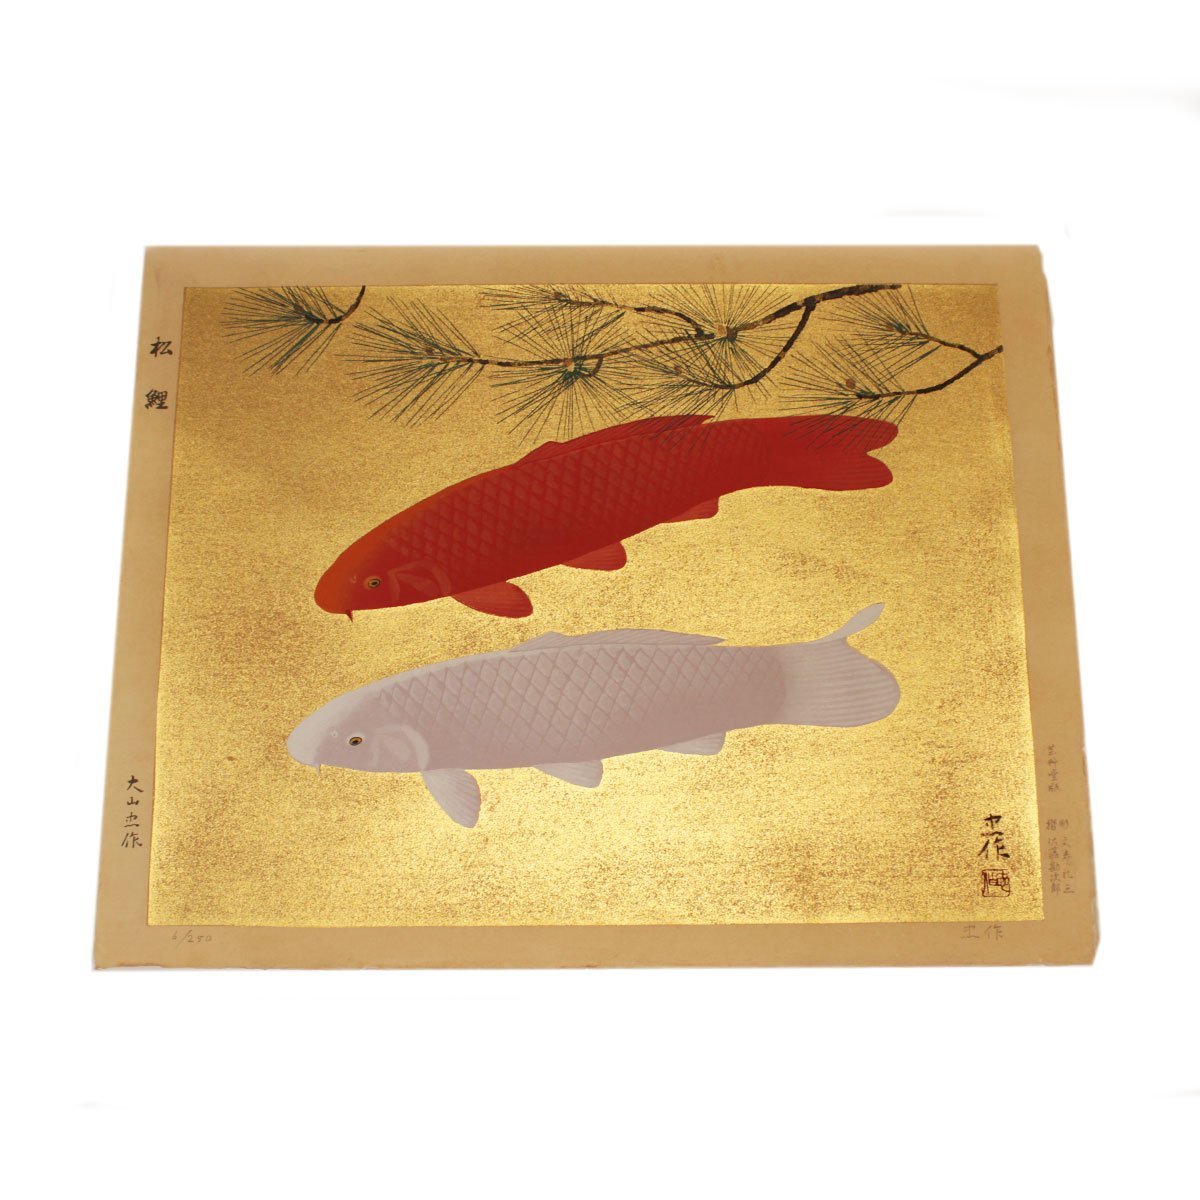 Matsukoi by Chusaku Oyama, lithograph, cased, boxed, lithograph, autographed, shipping 880 yen, Artwork, Prints, Lithography, Lithograph